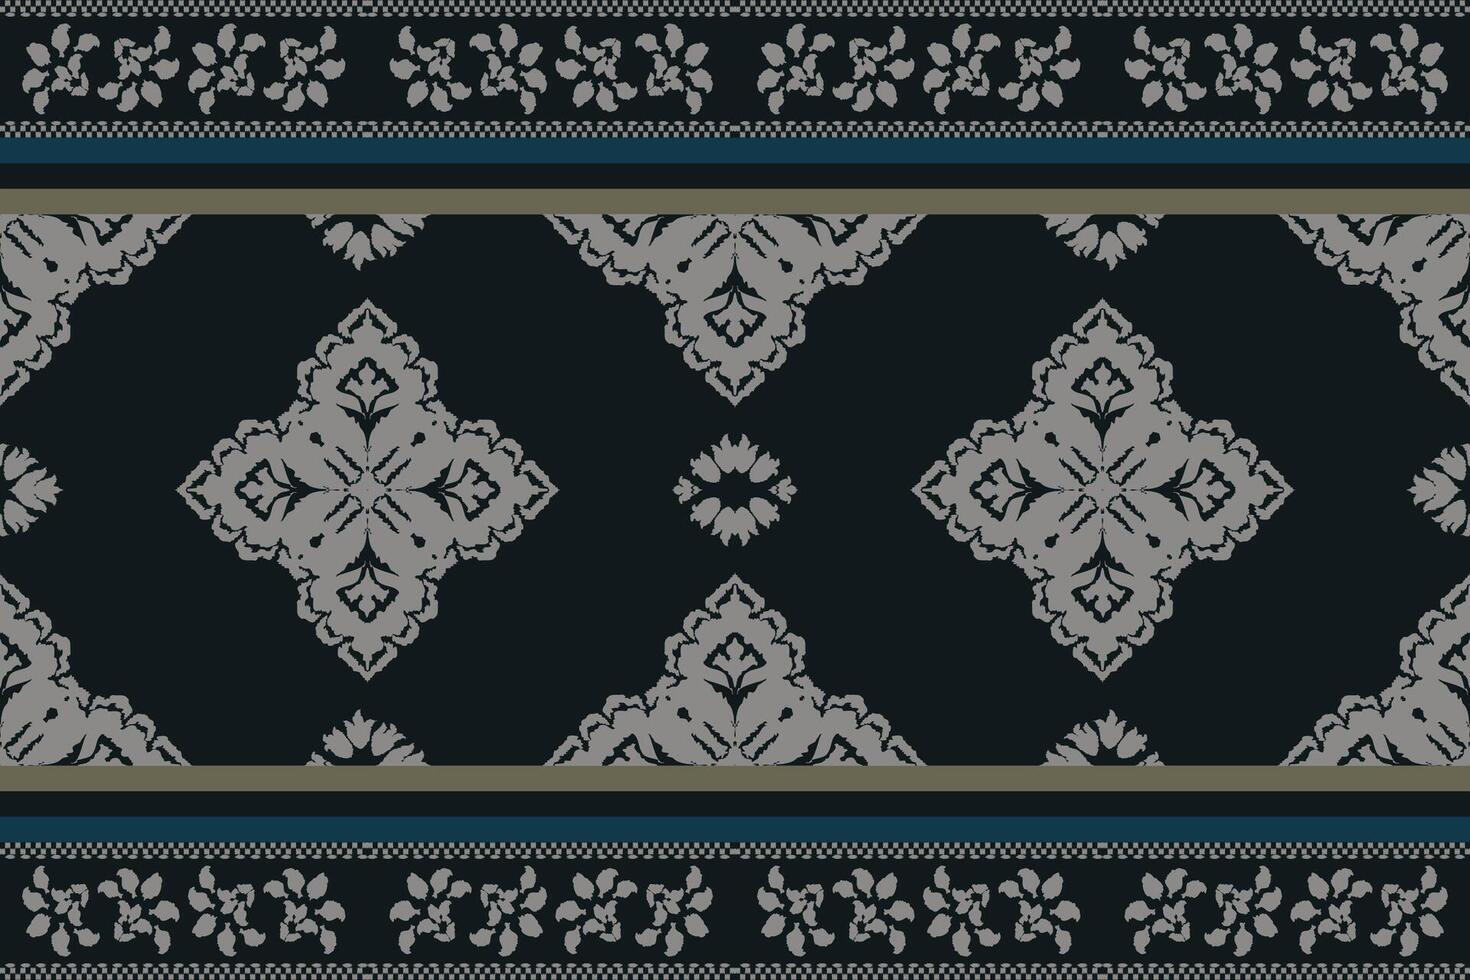 Ikat tribal Indian seamless pattern. Ethnic Aztec fabric carpet mandala ornament native boho chevron textile.Geometric African American oriental traditional vector illustrations. Embroidery style.